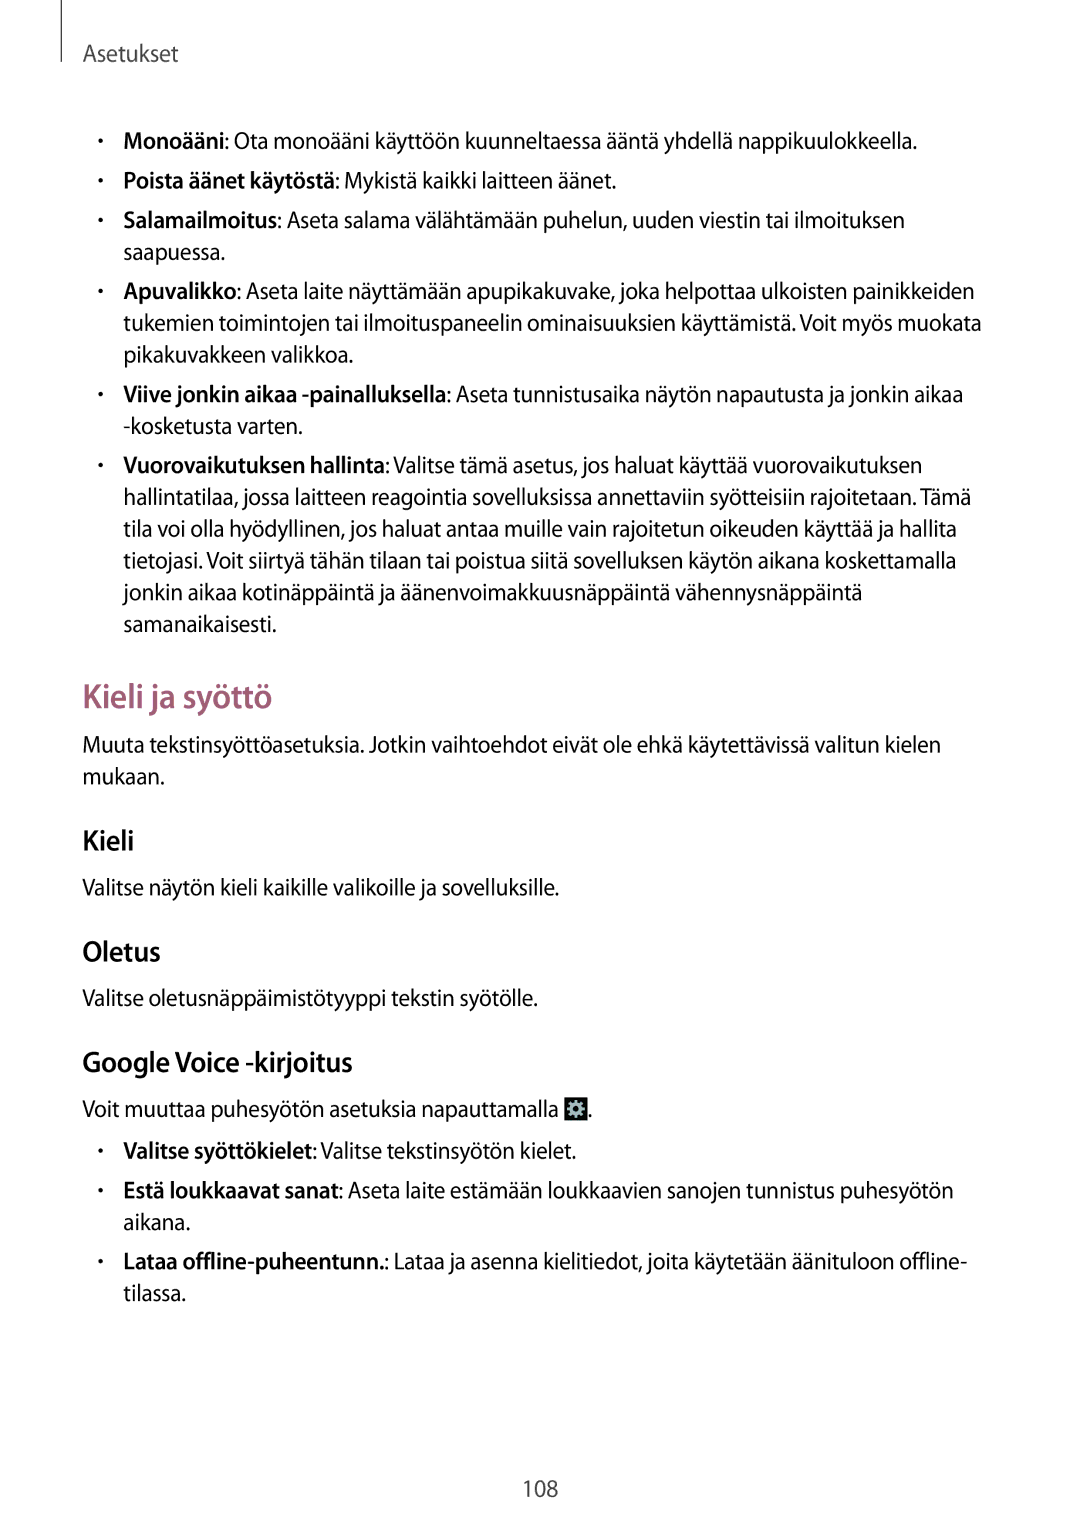 Samsung SM-G3815RWANEE, SM-G3815ZBANEE, SM-G3815HKANEE manual Kieli ja syöttö, Oletus, Google Voice -kirjoitus 